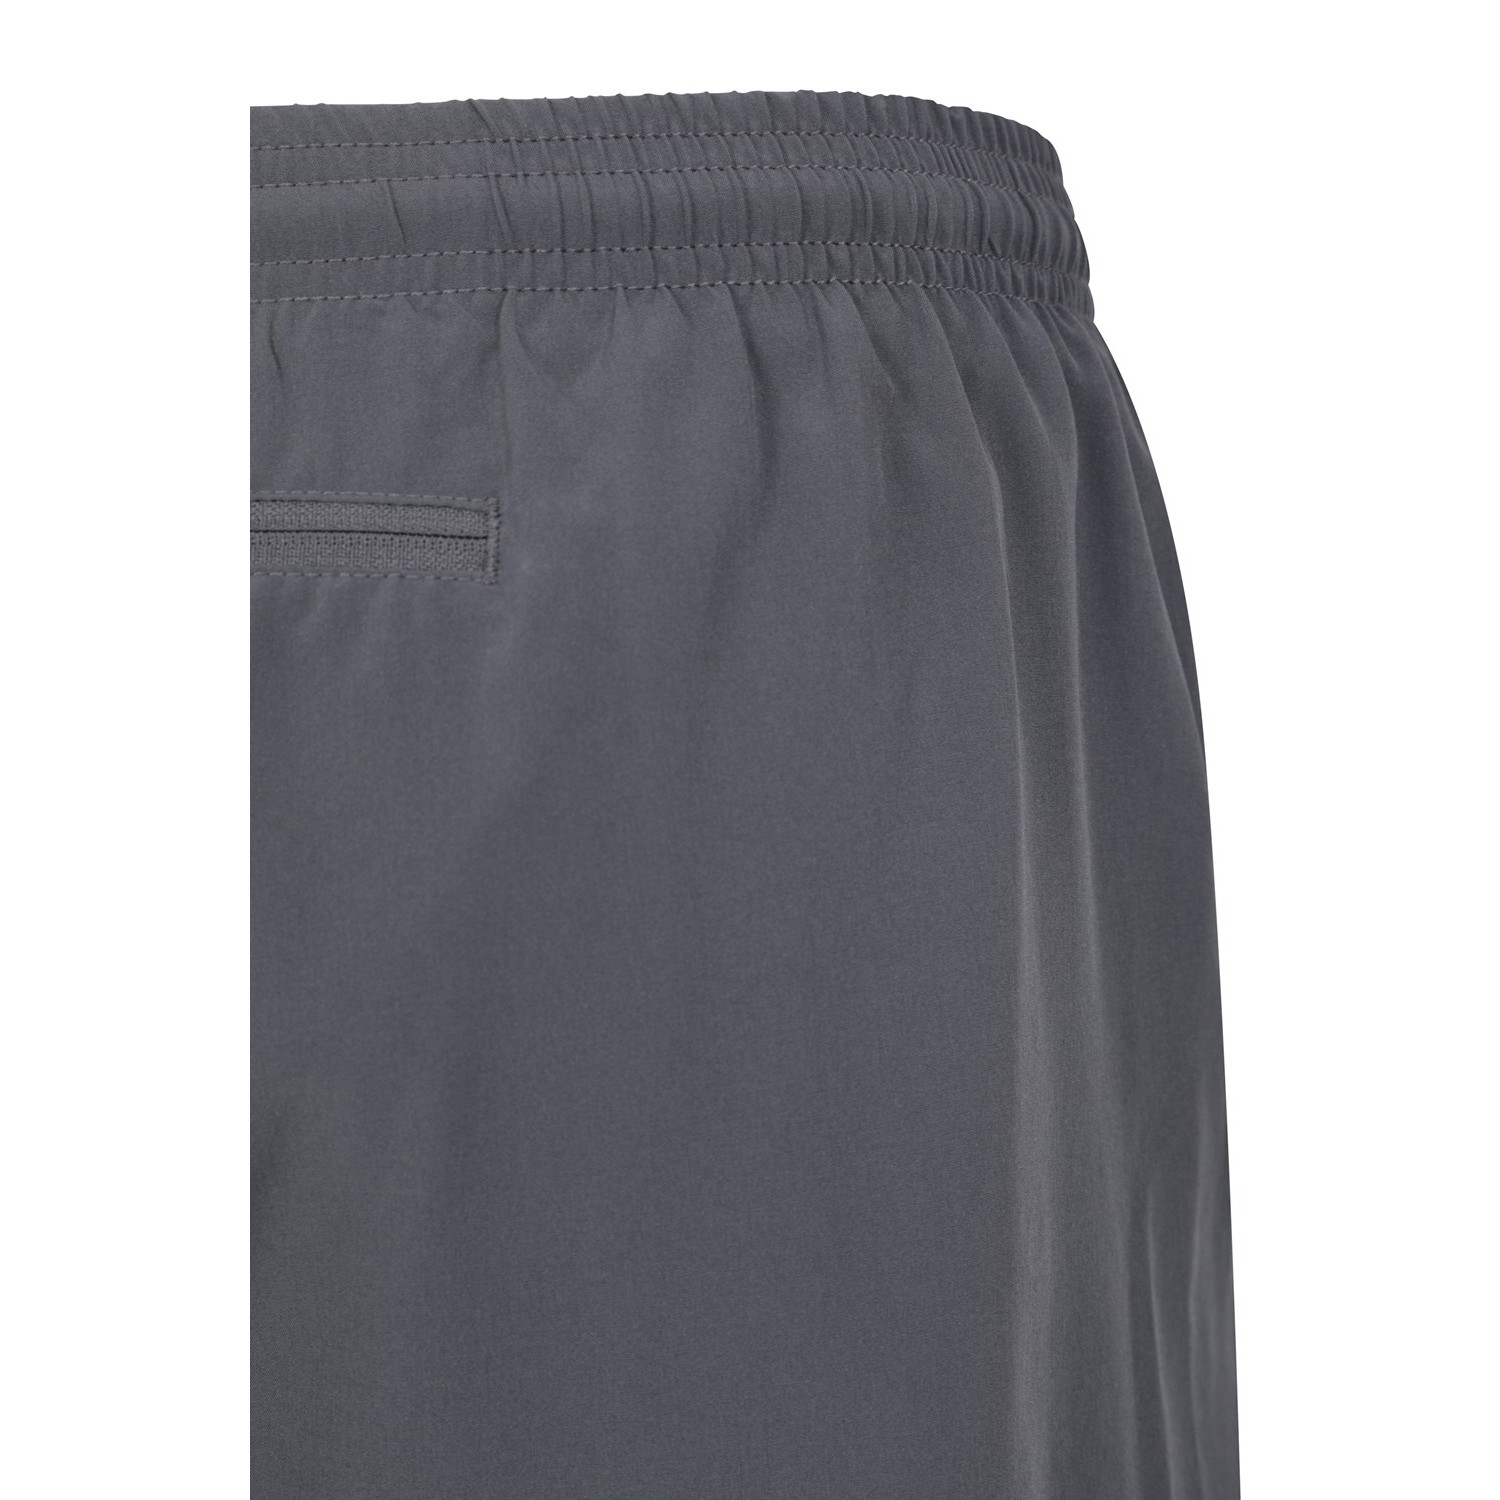 Pantalones Cortos Diseño 2 En 1 Mountain Warehouse Motion